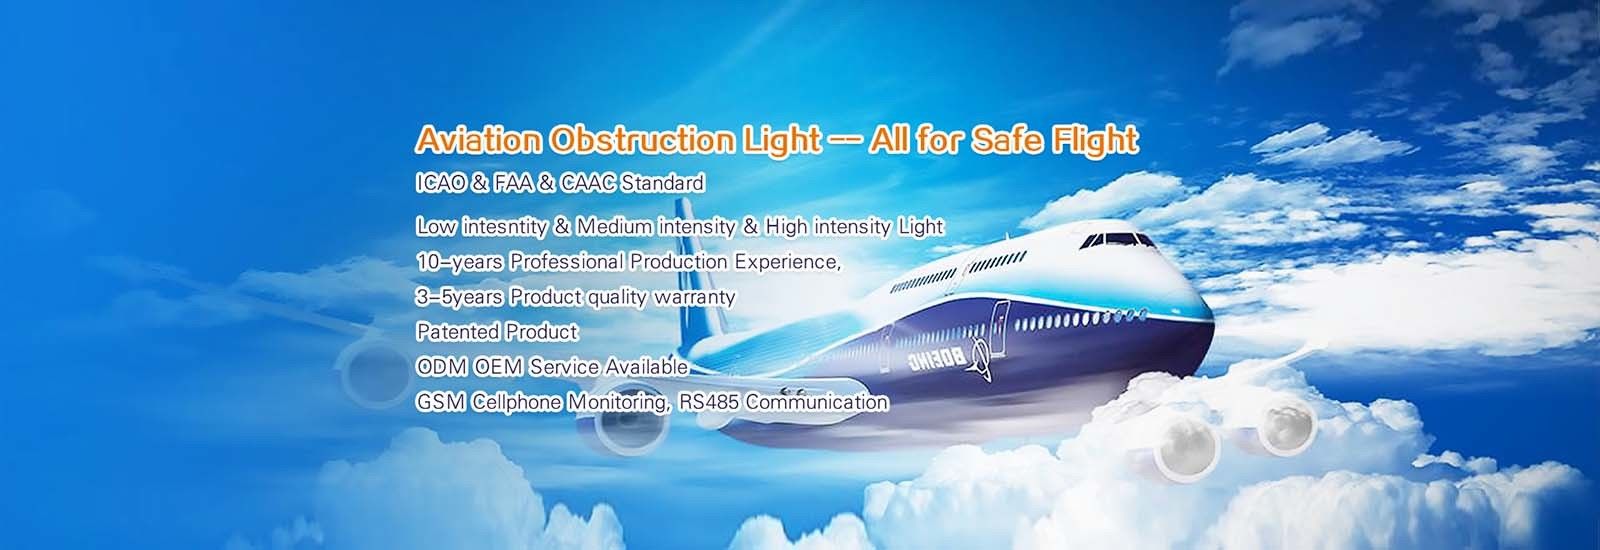 LED Aviation Obstruction Light